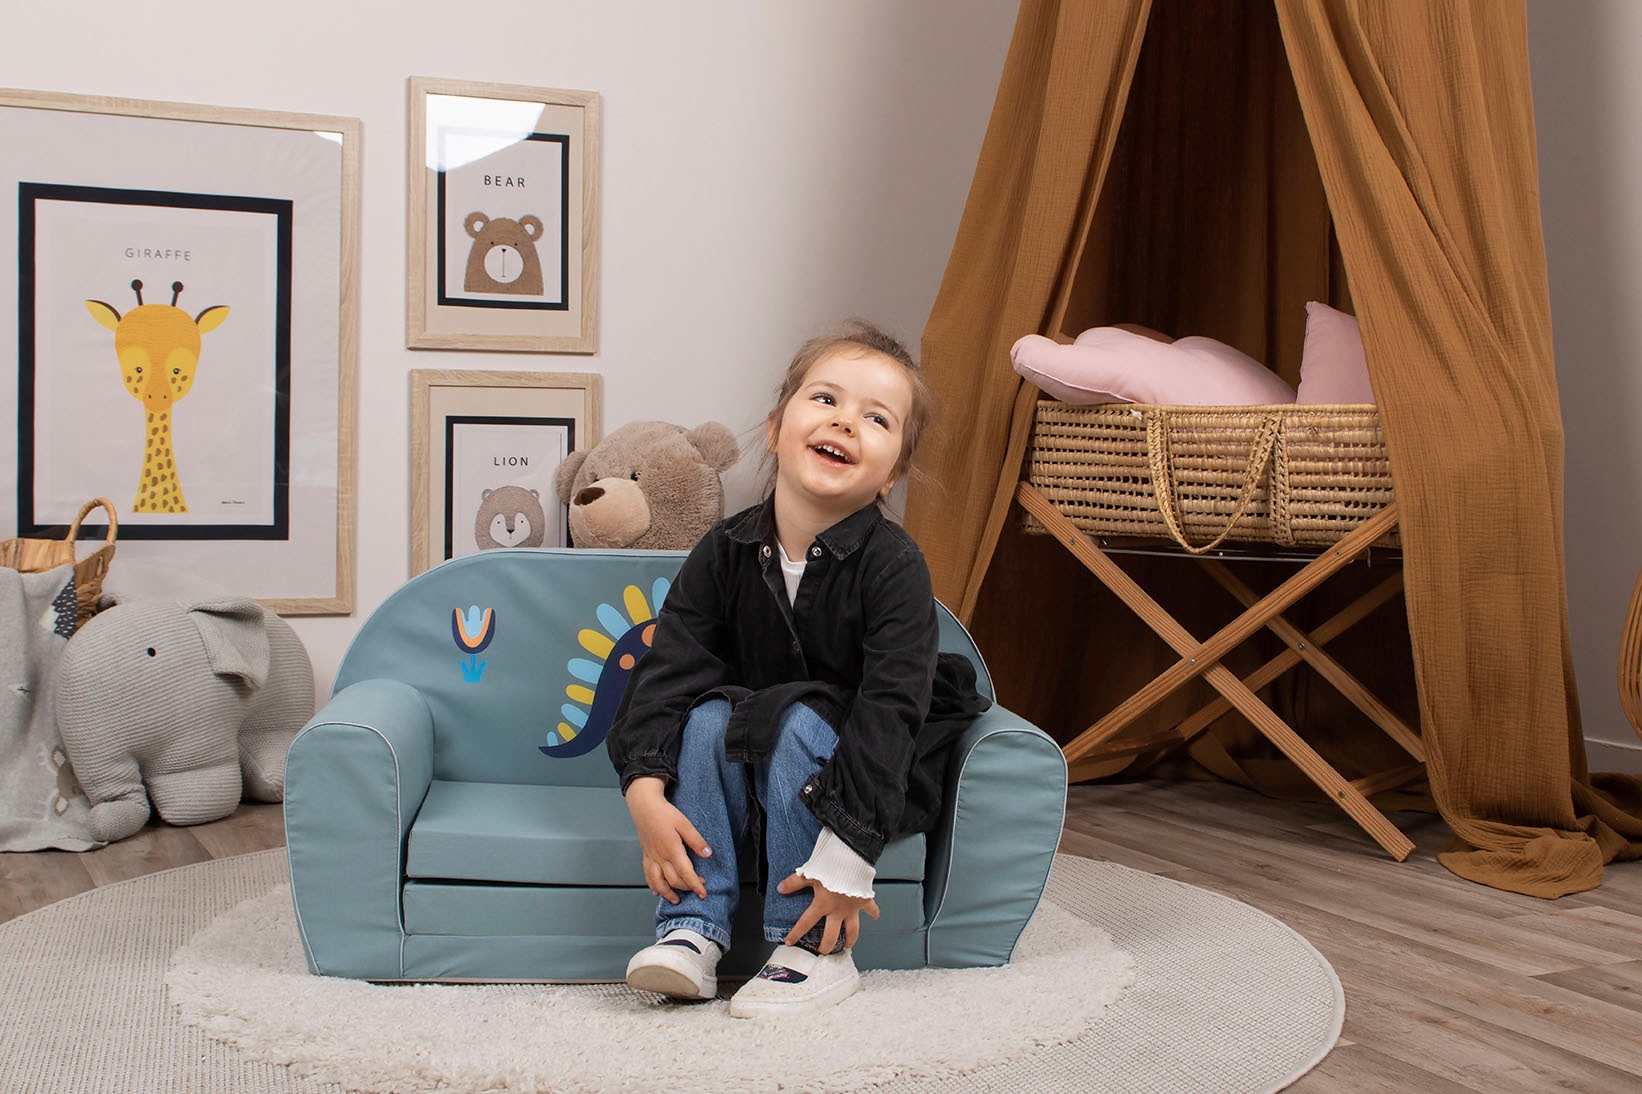 Knorrtoys® Sofa »Dino«, für Kinder; Made in Europe